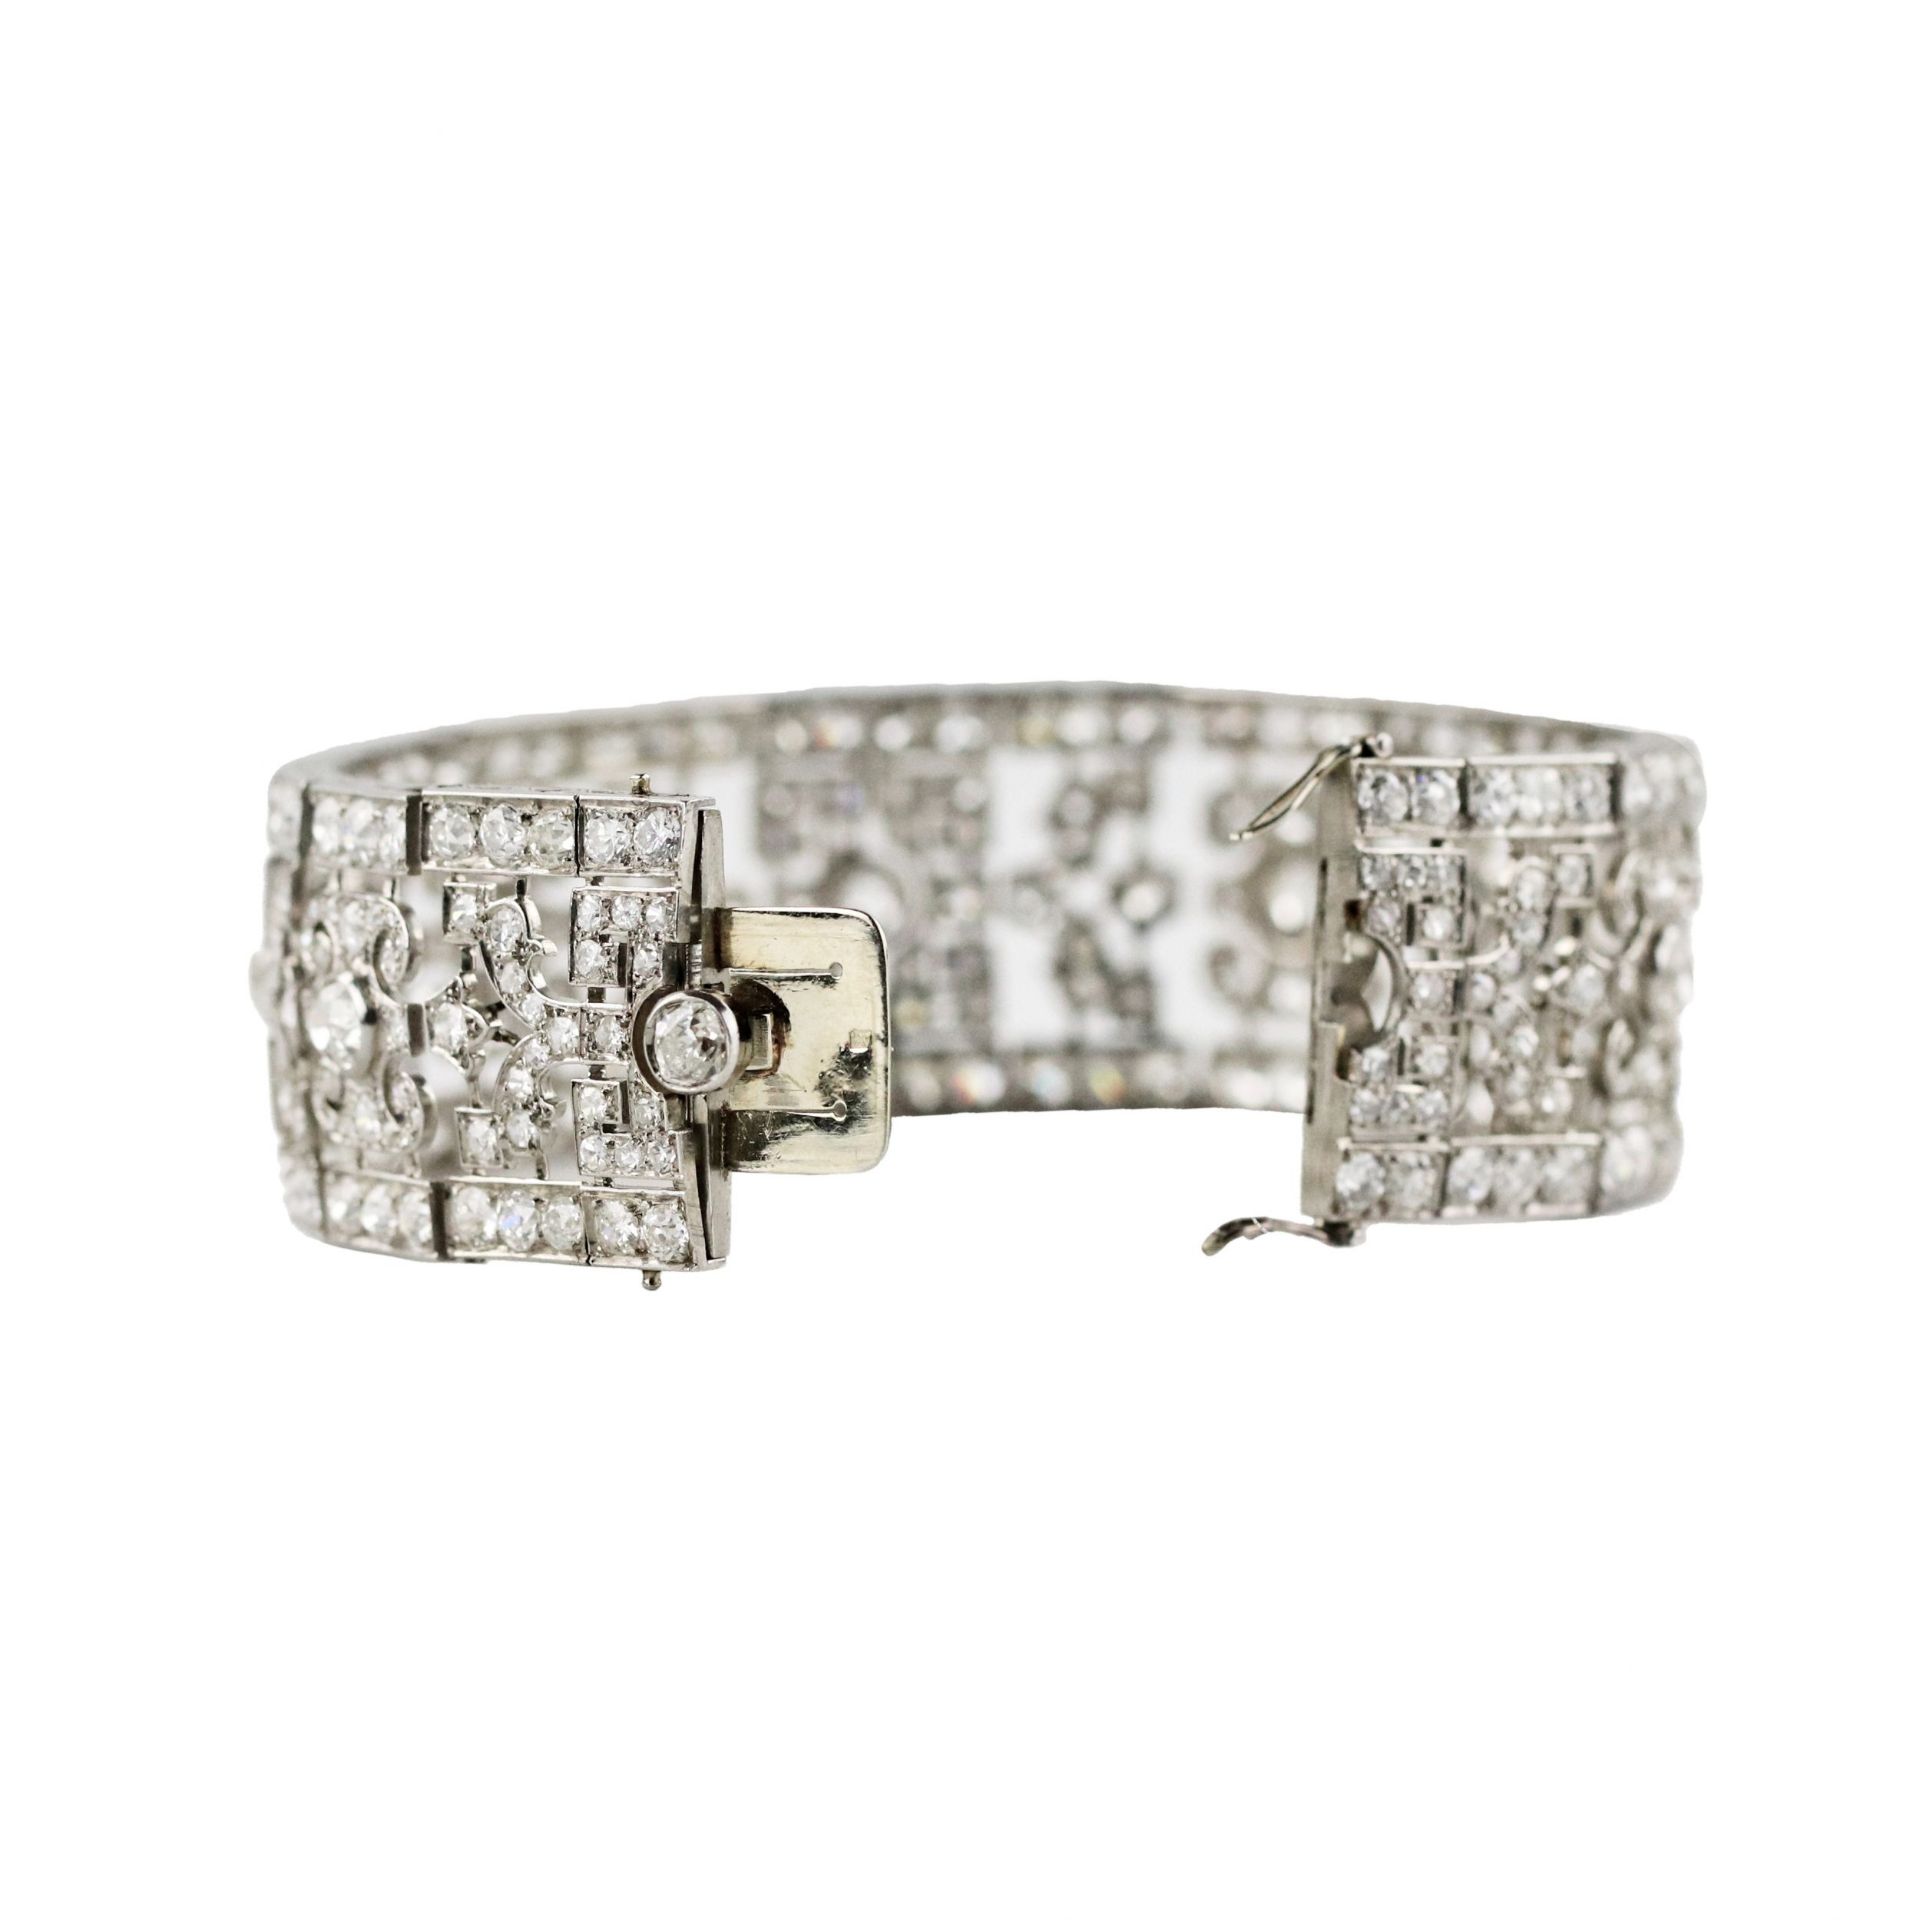 Platinum bracelet with diamonds, NARDI, Italy. In original case. - Image 5 of 9